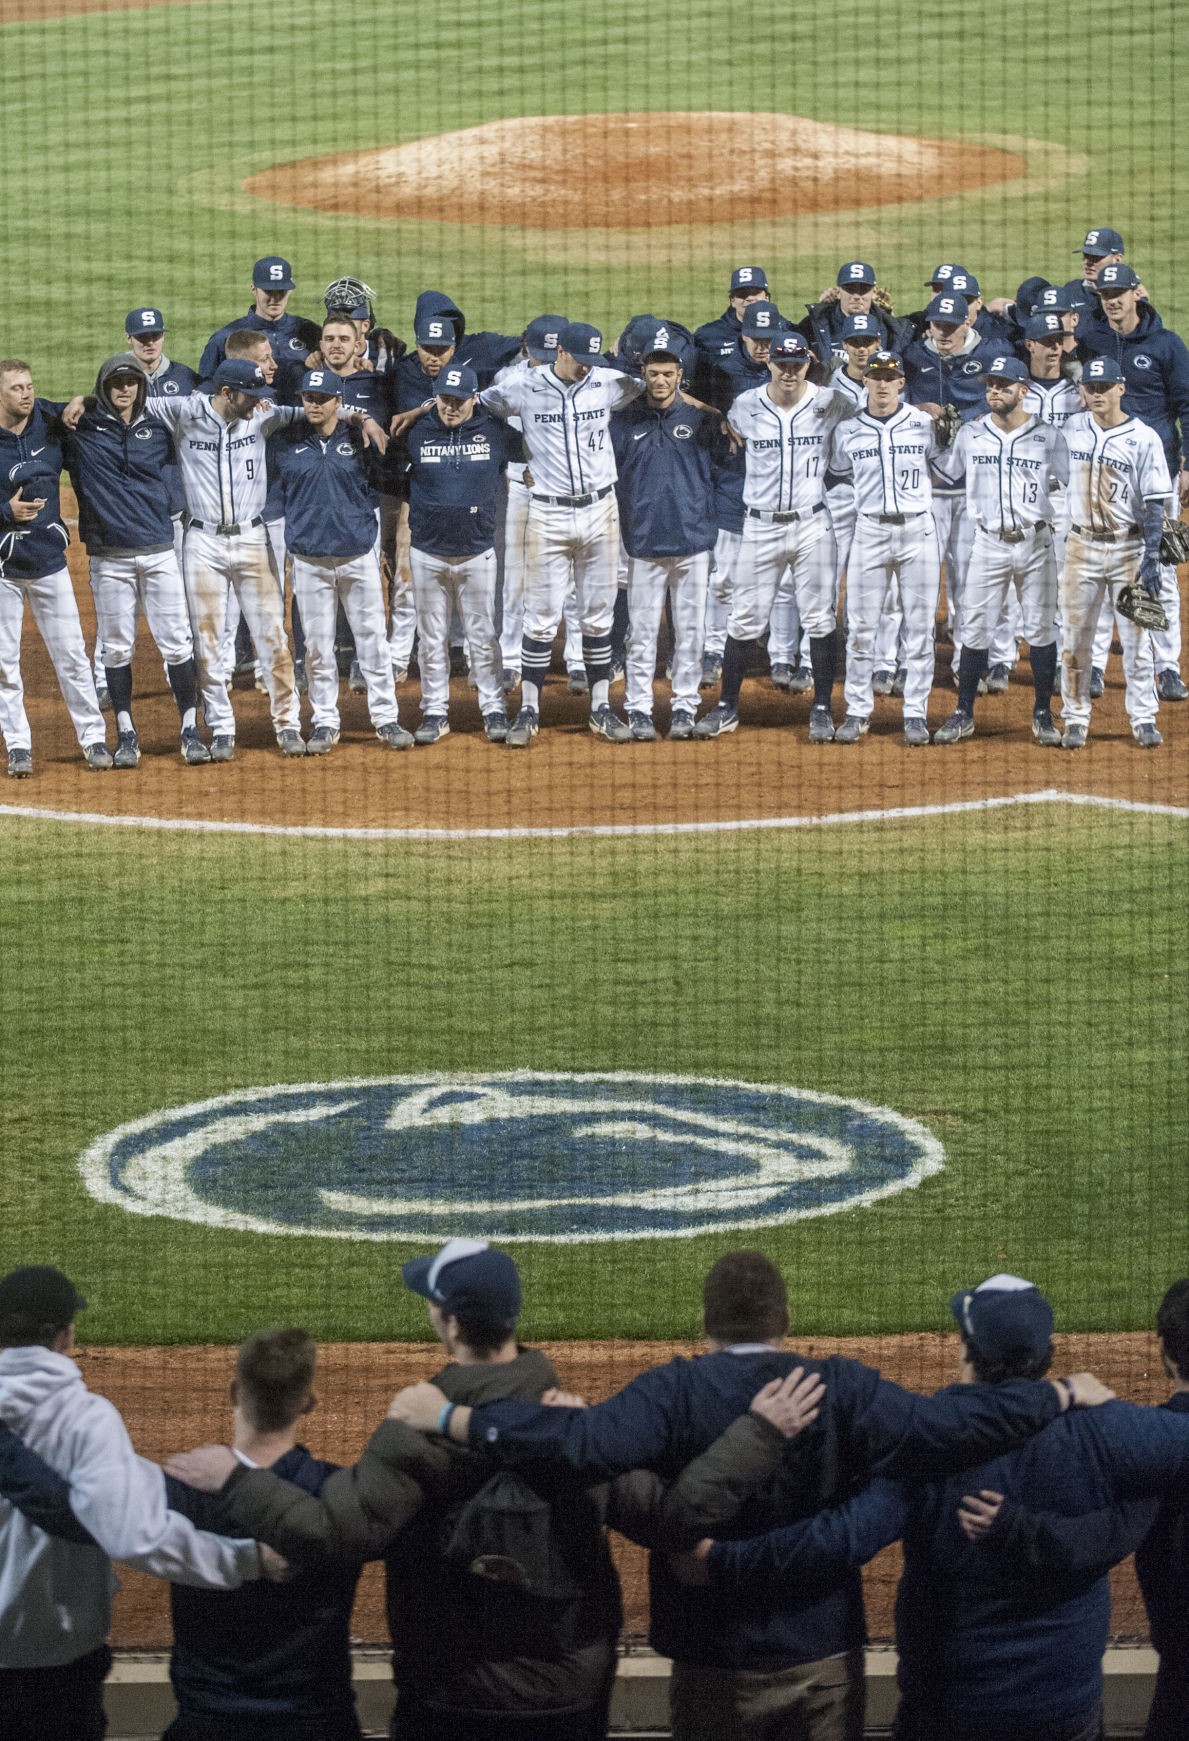 Penn State baseball wins fall exhibition games, looks towards 2019 season